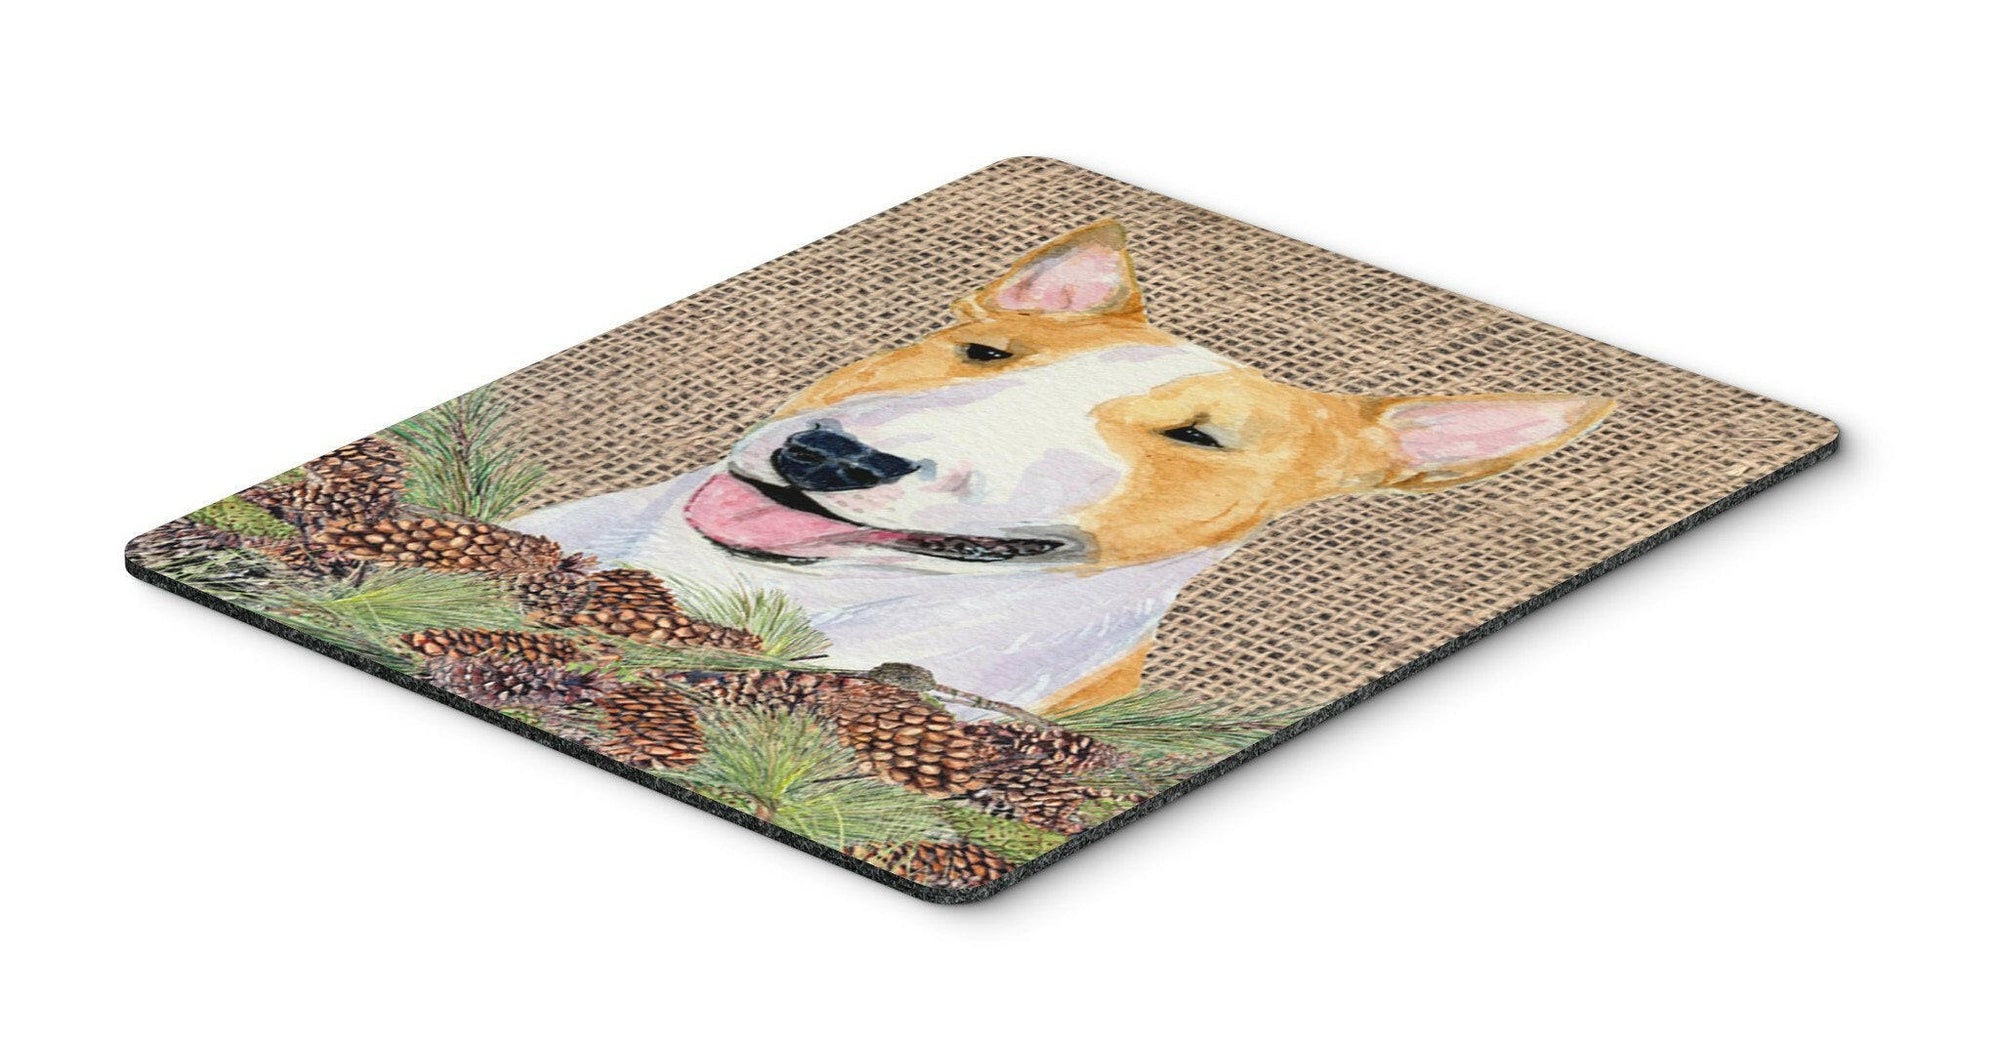 Bull Terrier Mouse Pad, Hot Pad or Trivet by Caroline's Treasures